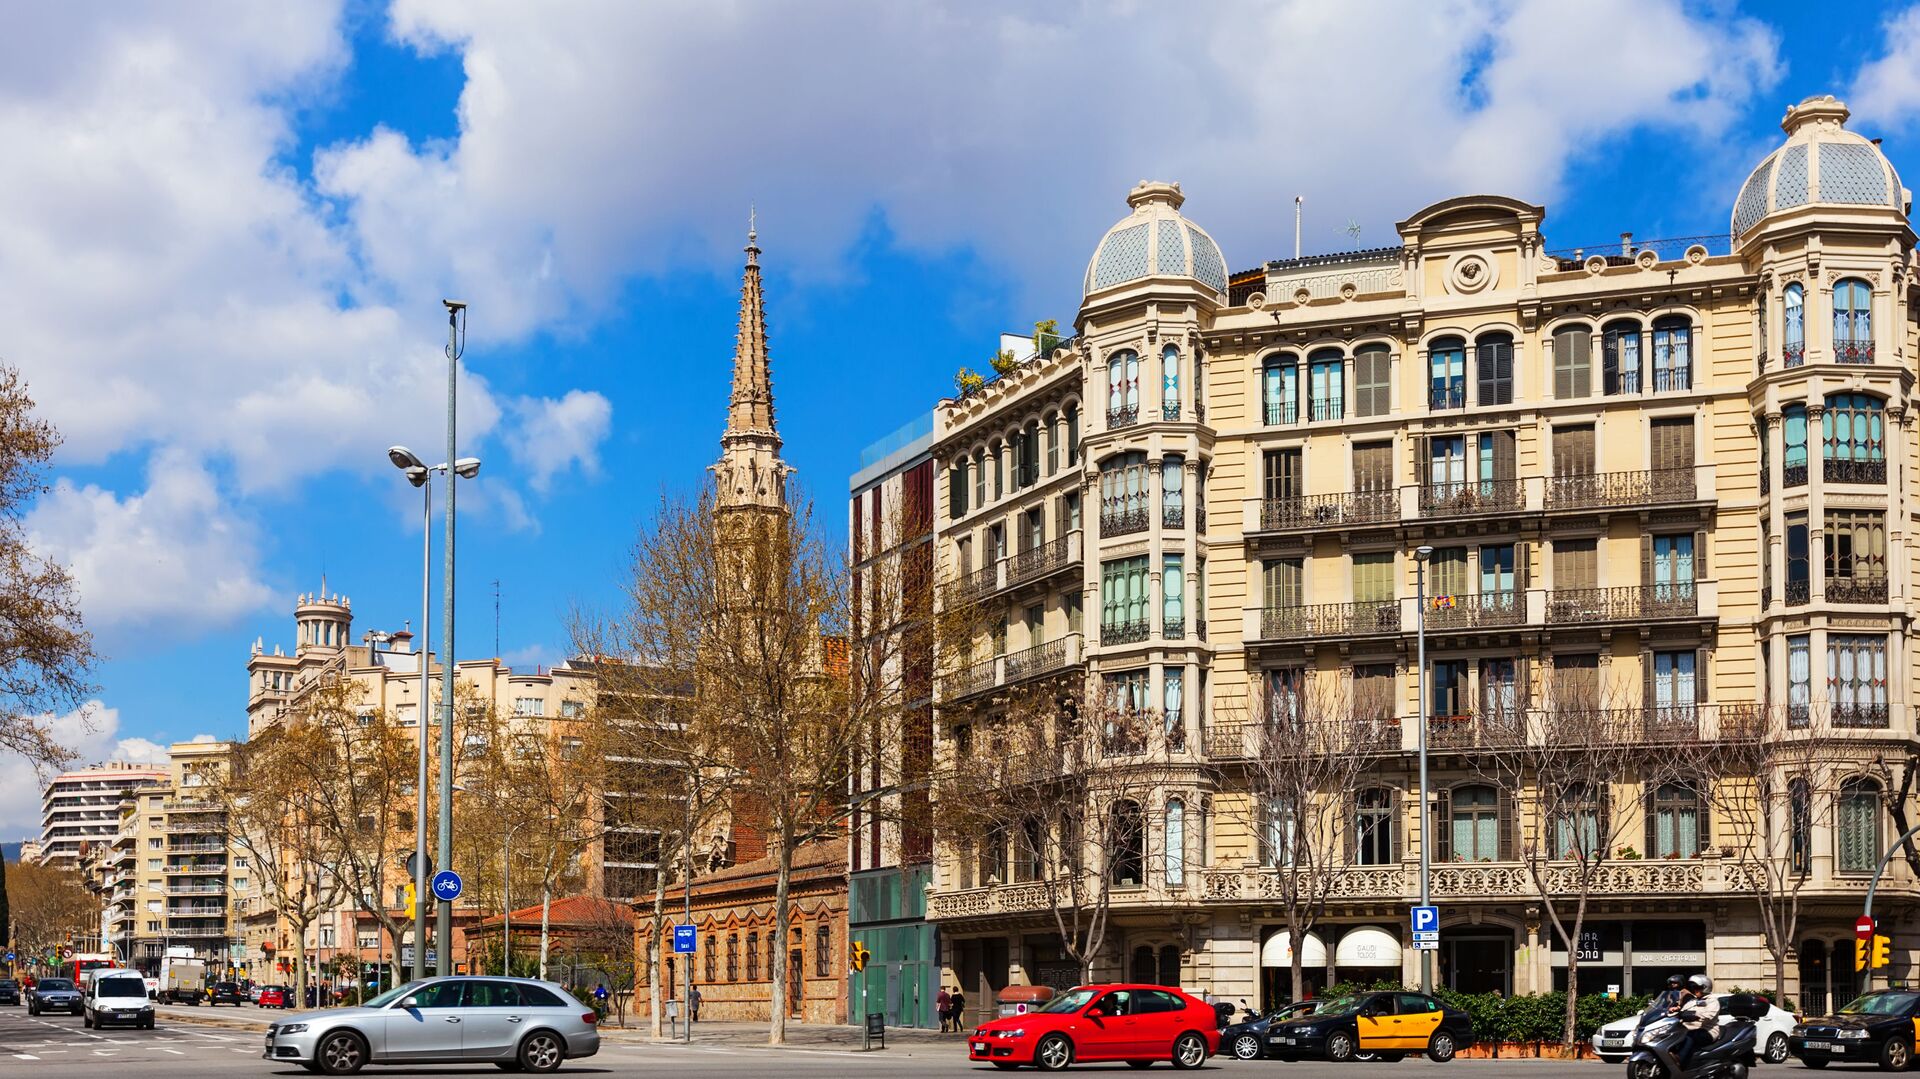 Улица Passeig de Sant Joan в Барселоне, Испания - Sputnik Lietuva, 1920, 27.10.2021